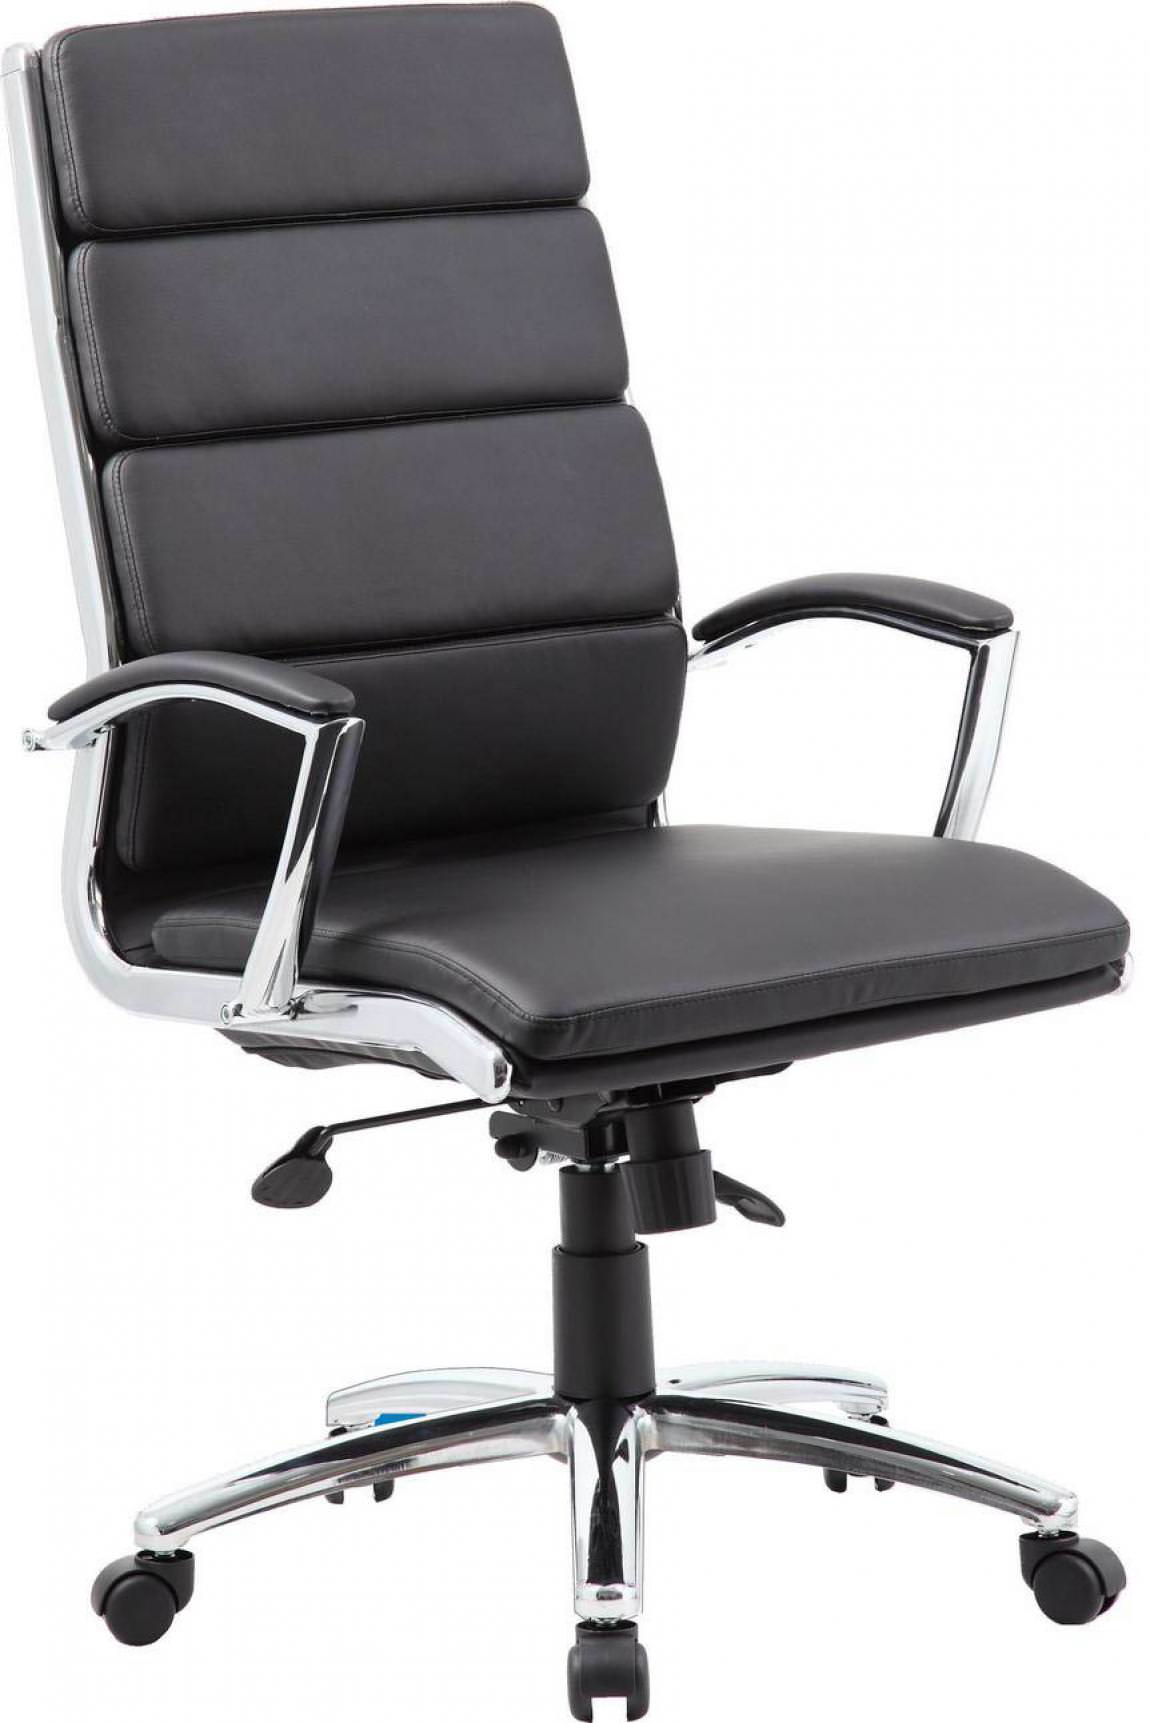 Stylish and Ultra Comfortable Executive Chair